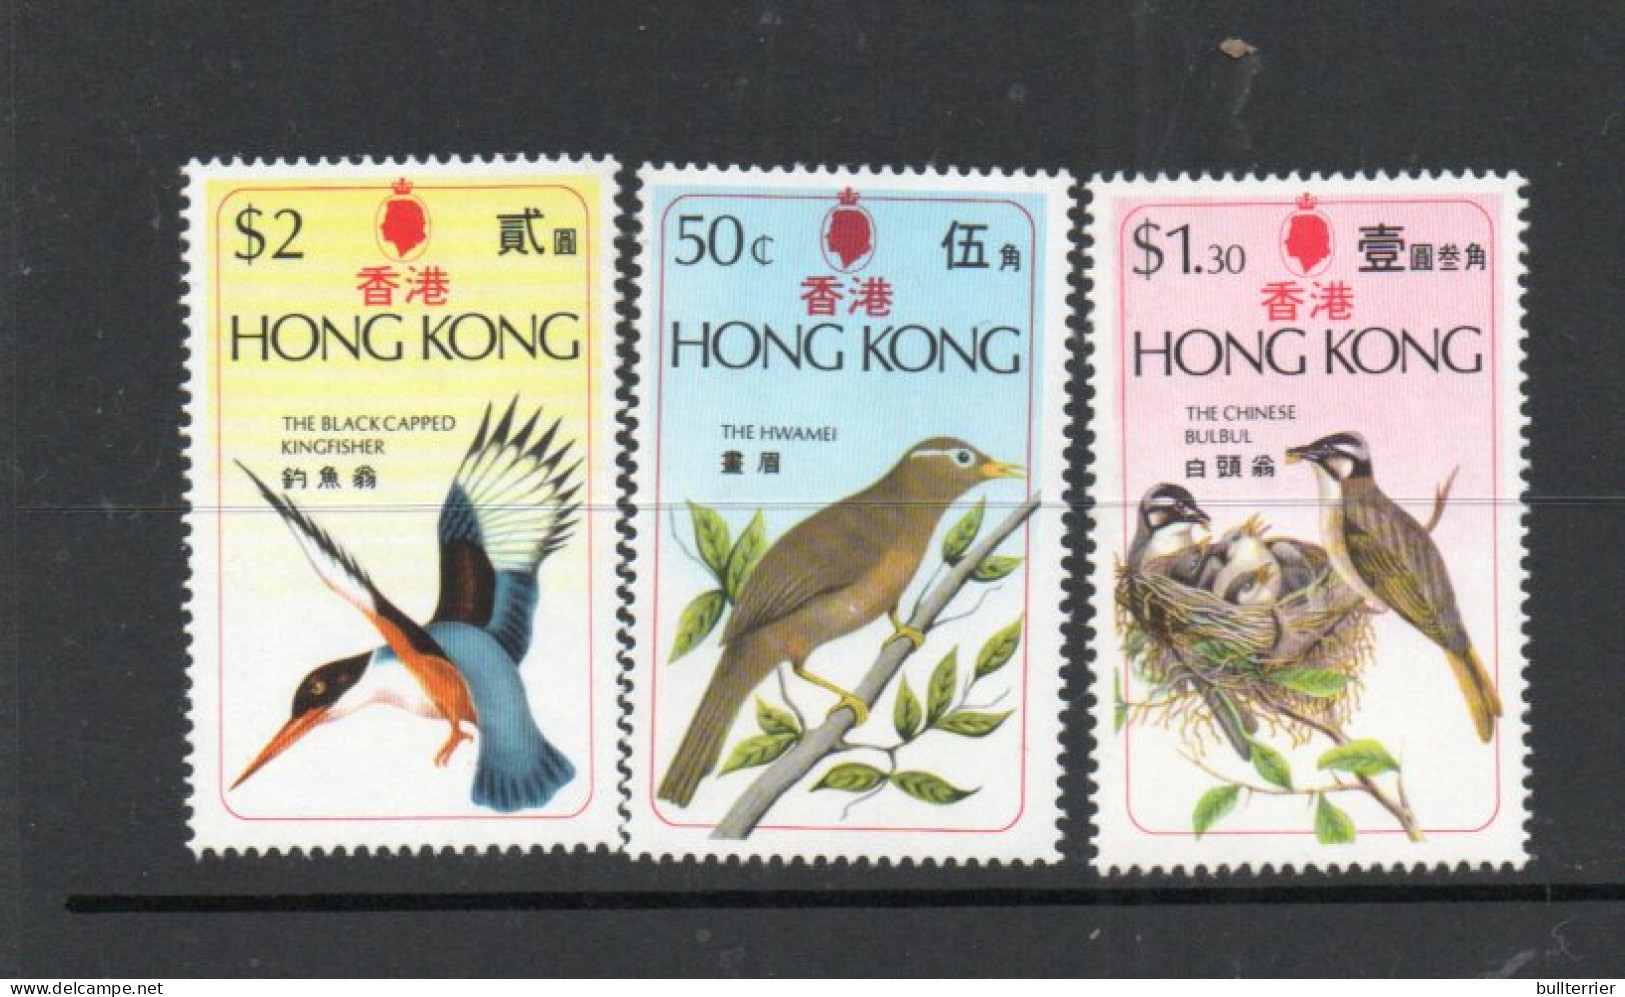 BIRDS - HONG KONG  - 1975- BIRDS SET OF 3  MINT NEVER HINGED, SG CAT £17 - Gallinaceans & Pheasants